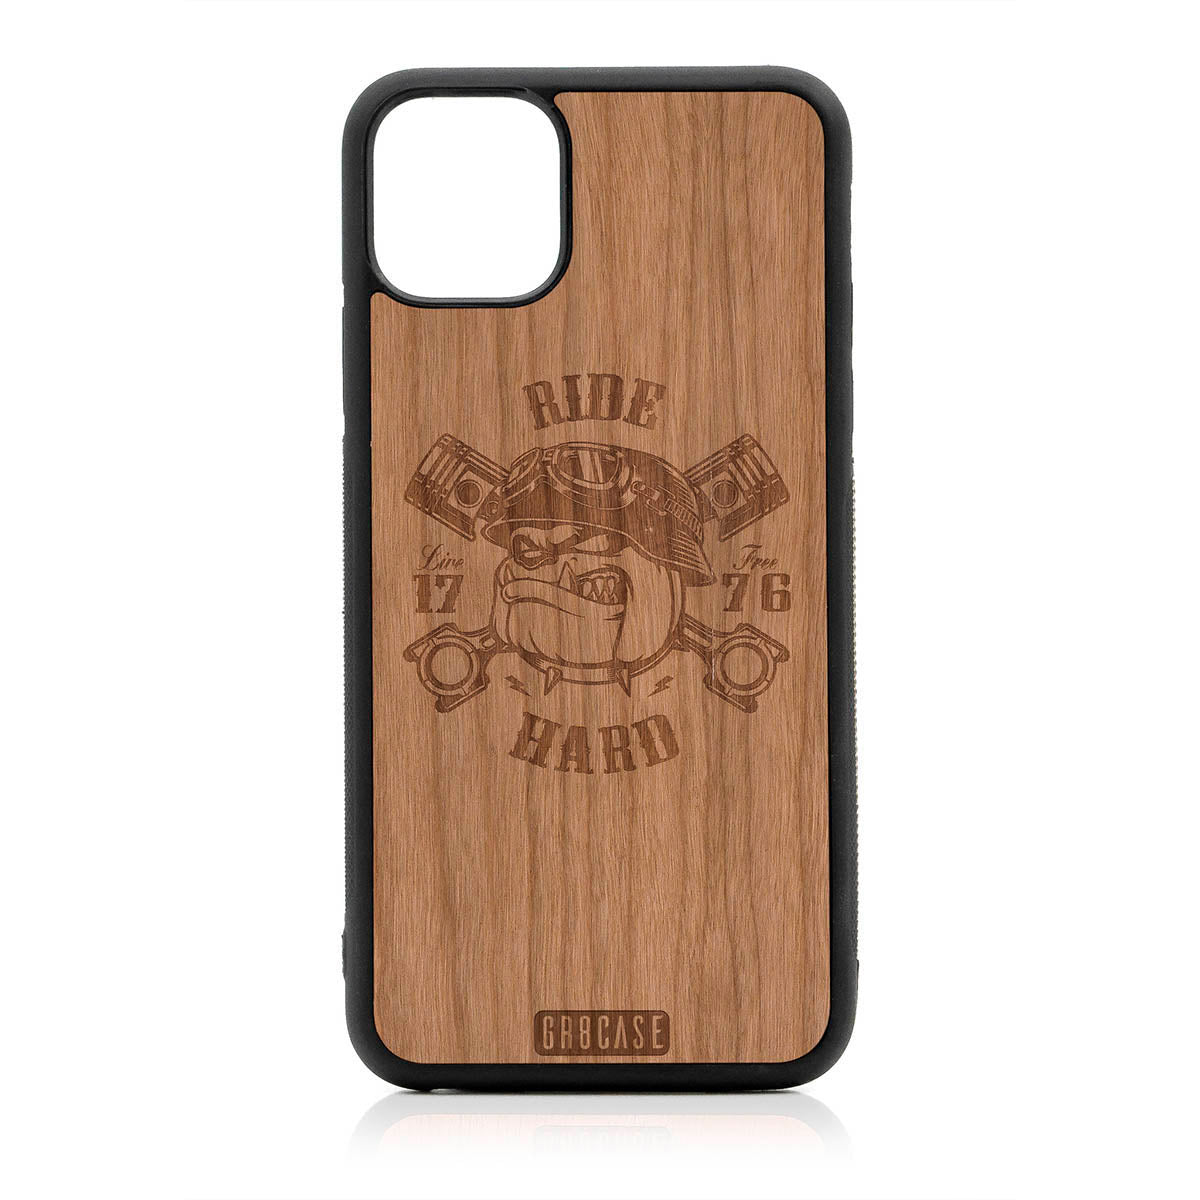 Ride Hard Live Free (Biker Dog) Design Wood Case For iPhone 11 Pro Max by GR8CASE